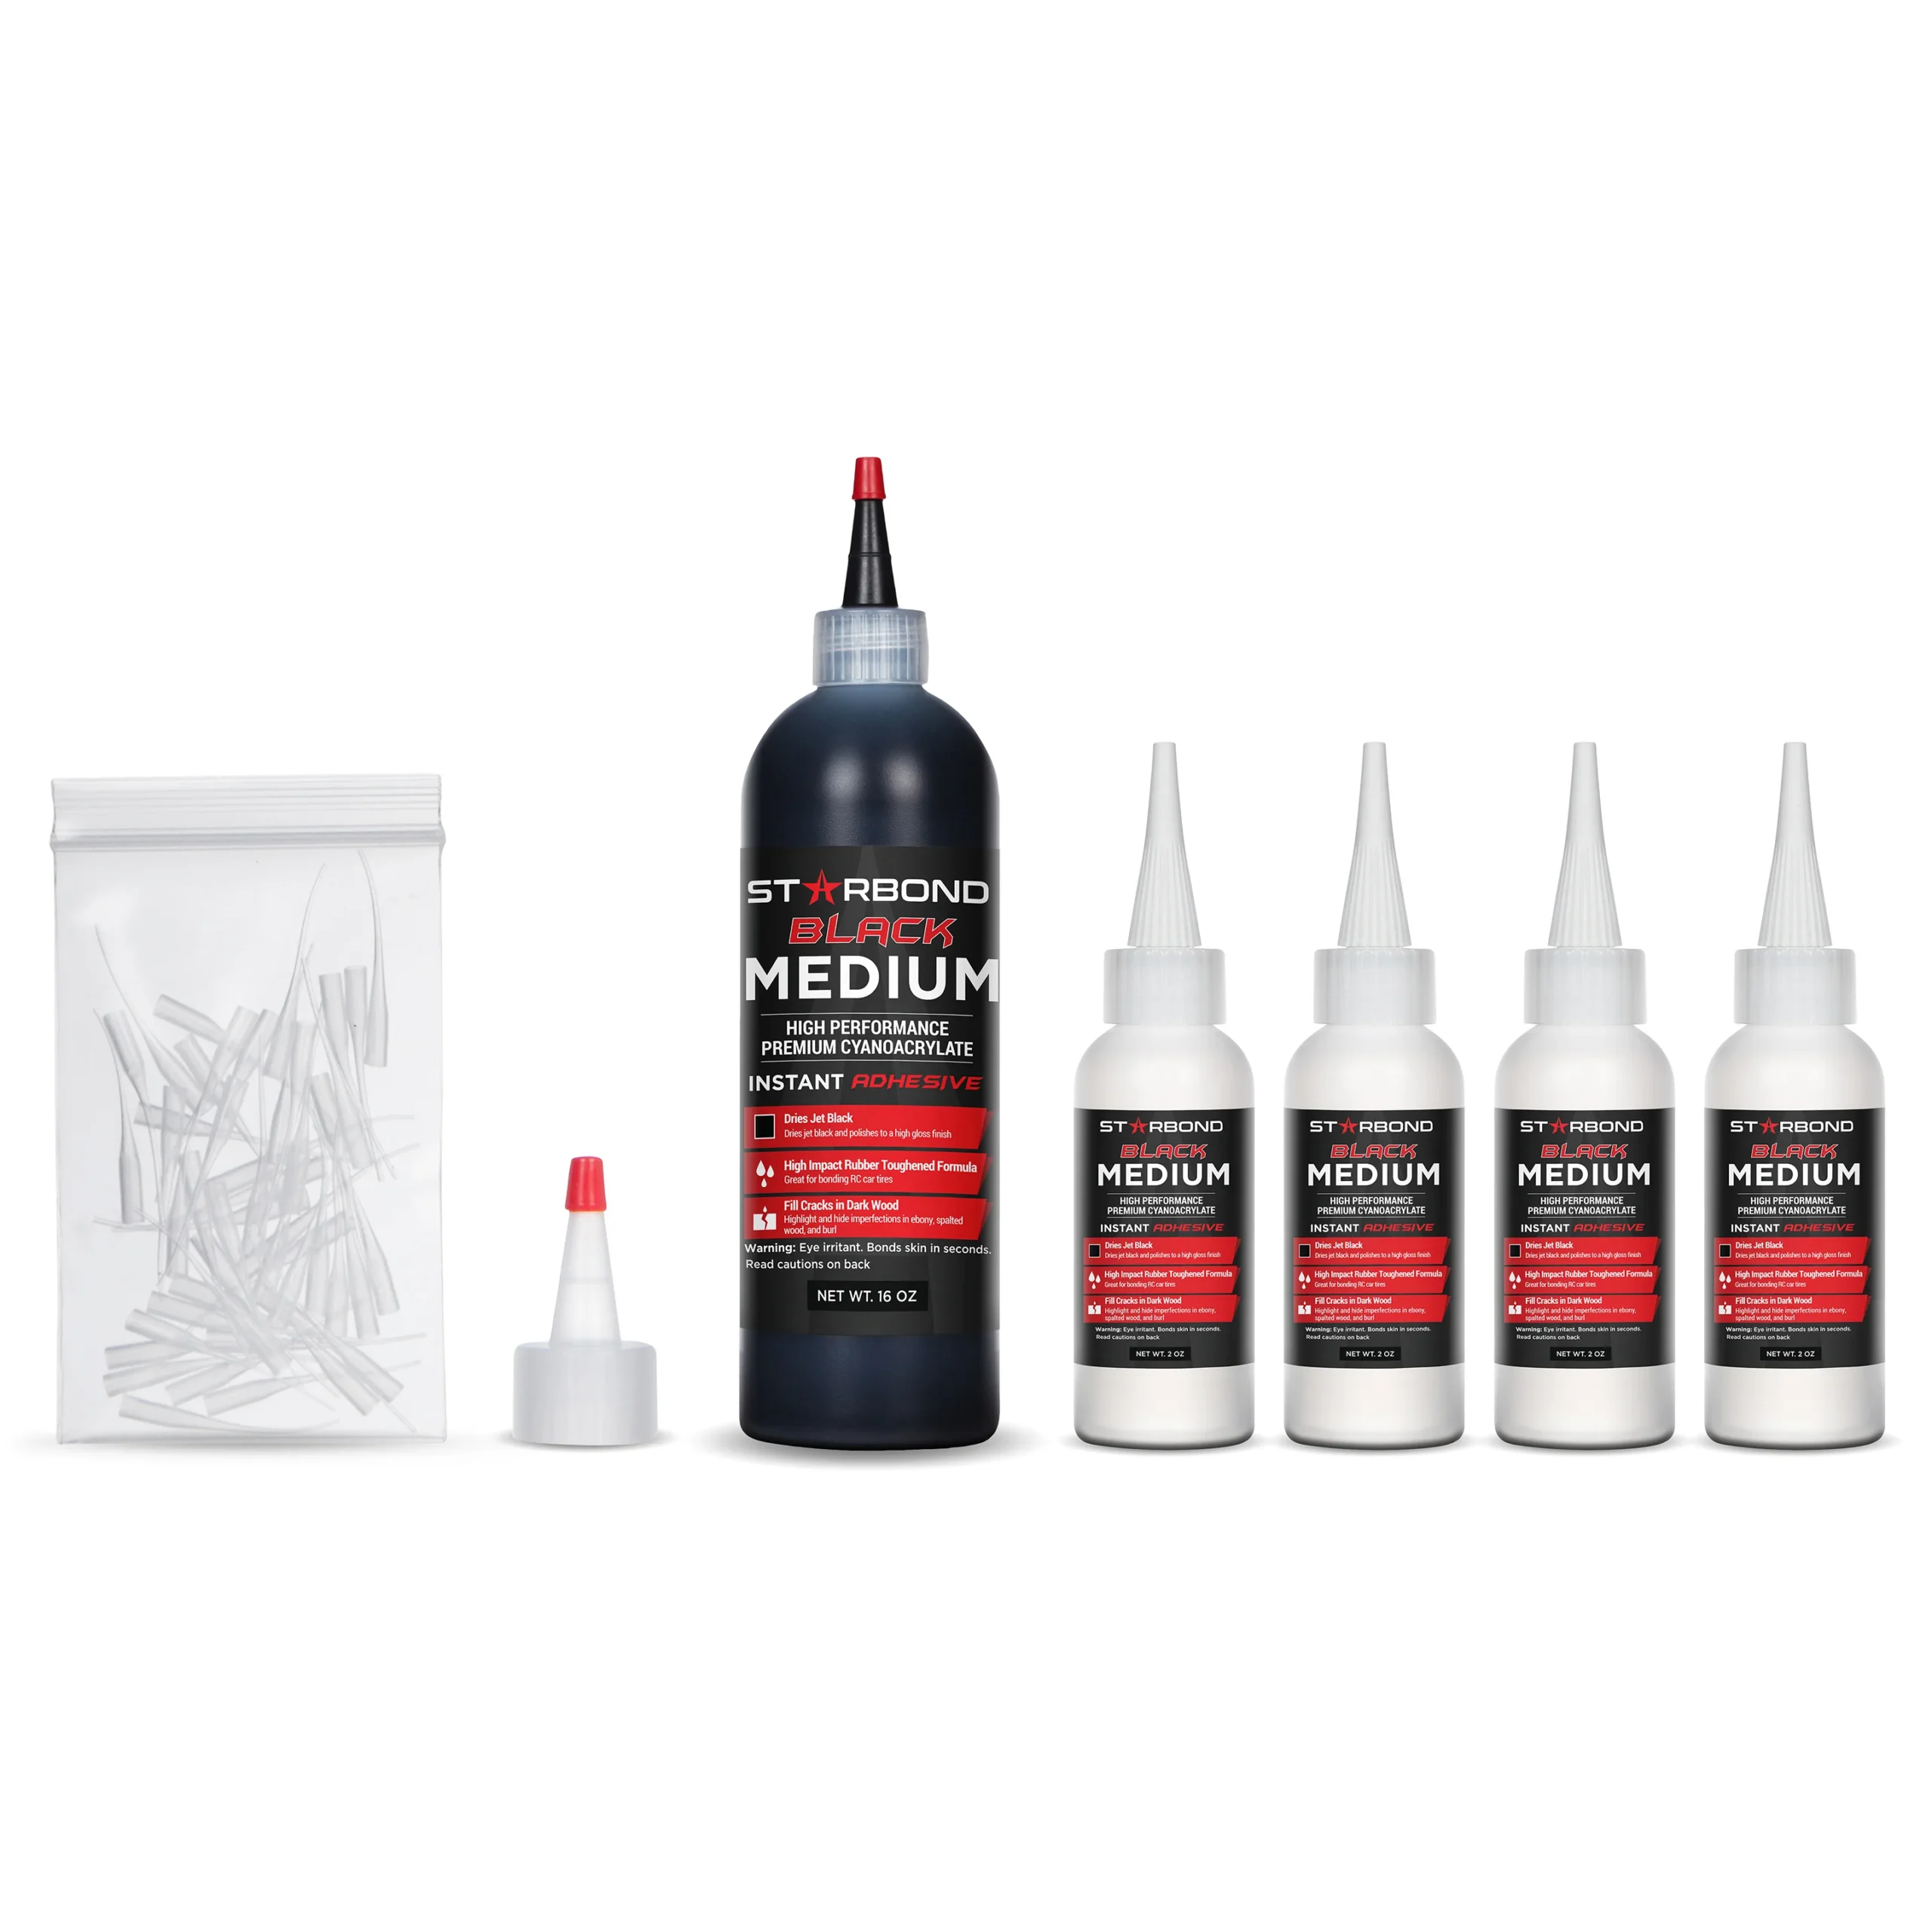 Starbond Black Medium-Thick CA Glue KBL-500, 2 ounce